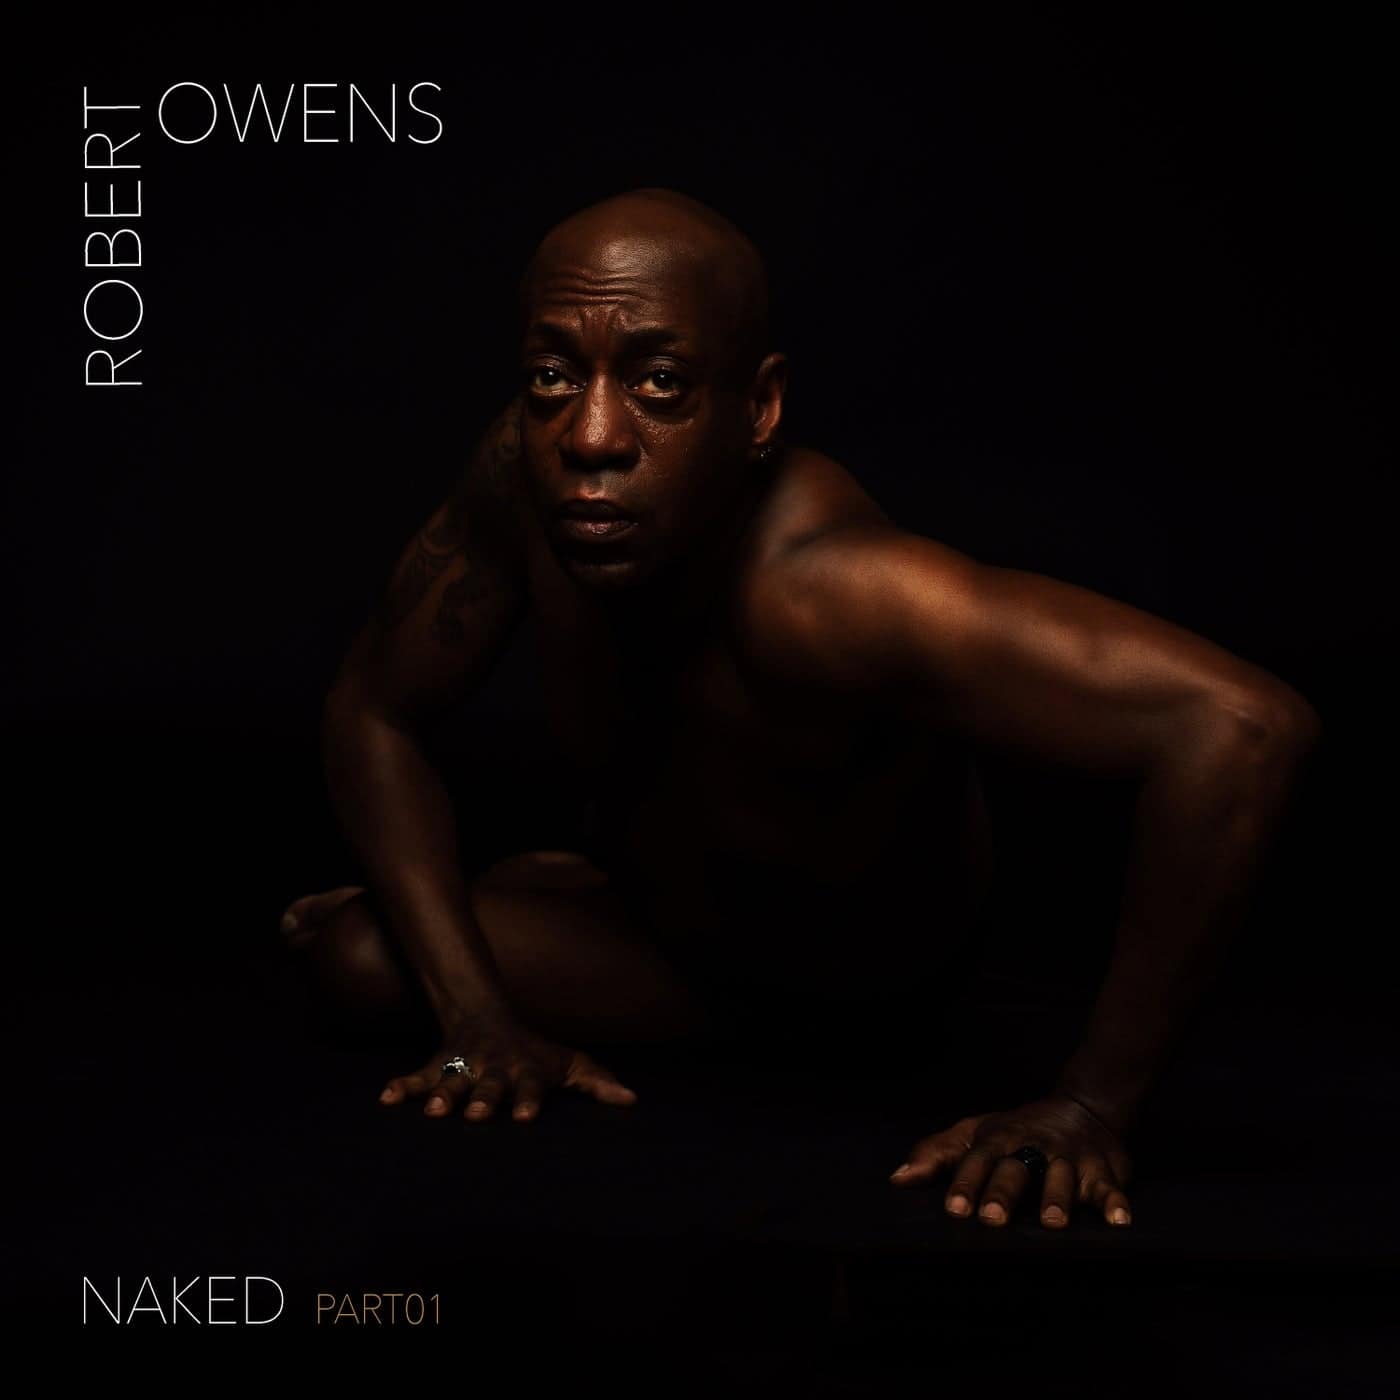 Download Robert Owens - Naked, Pt. 1 on Electrobuzz